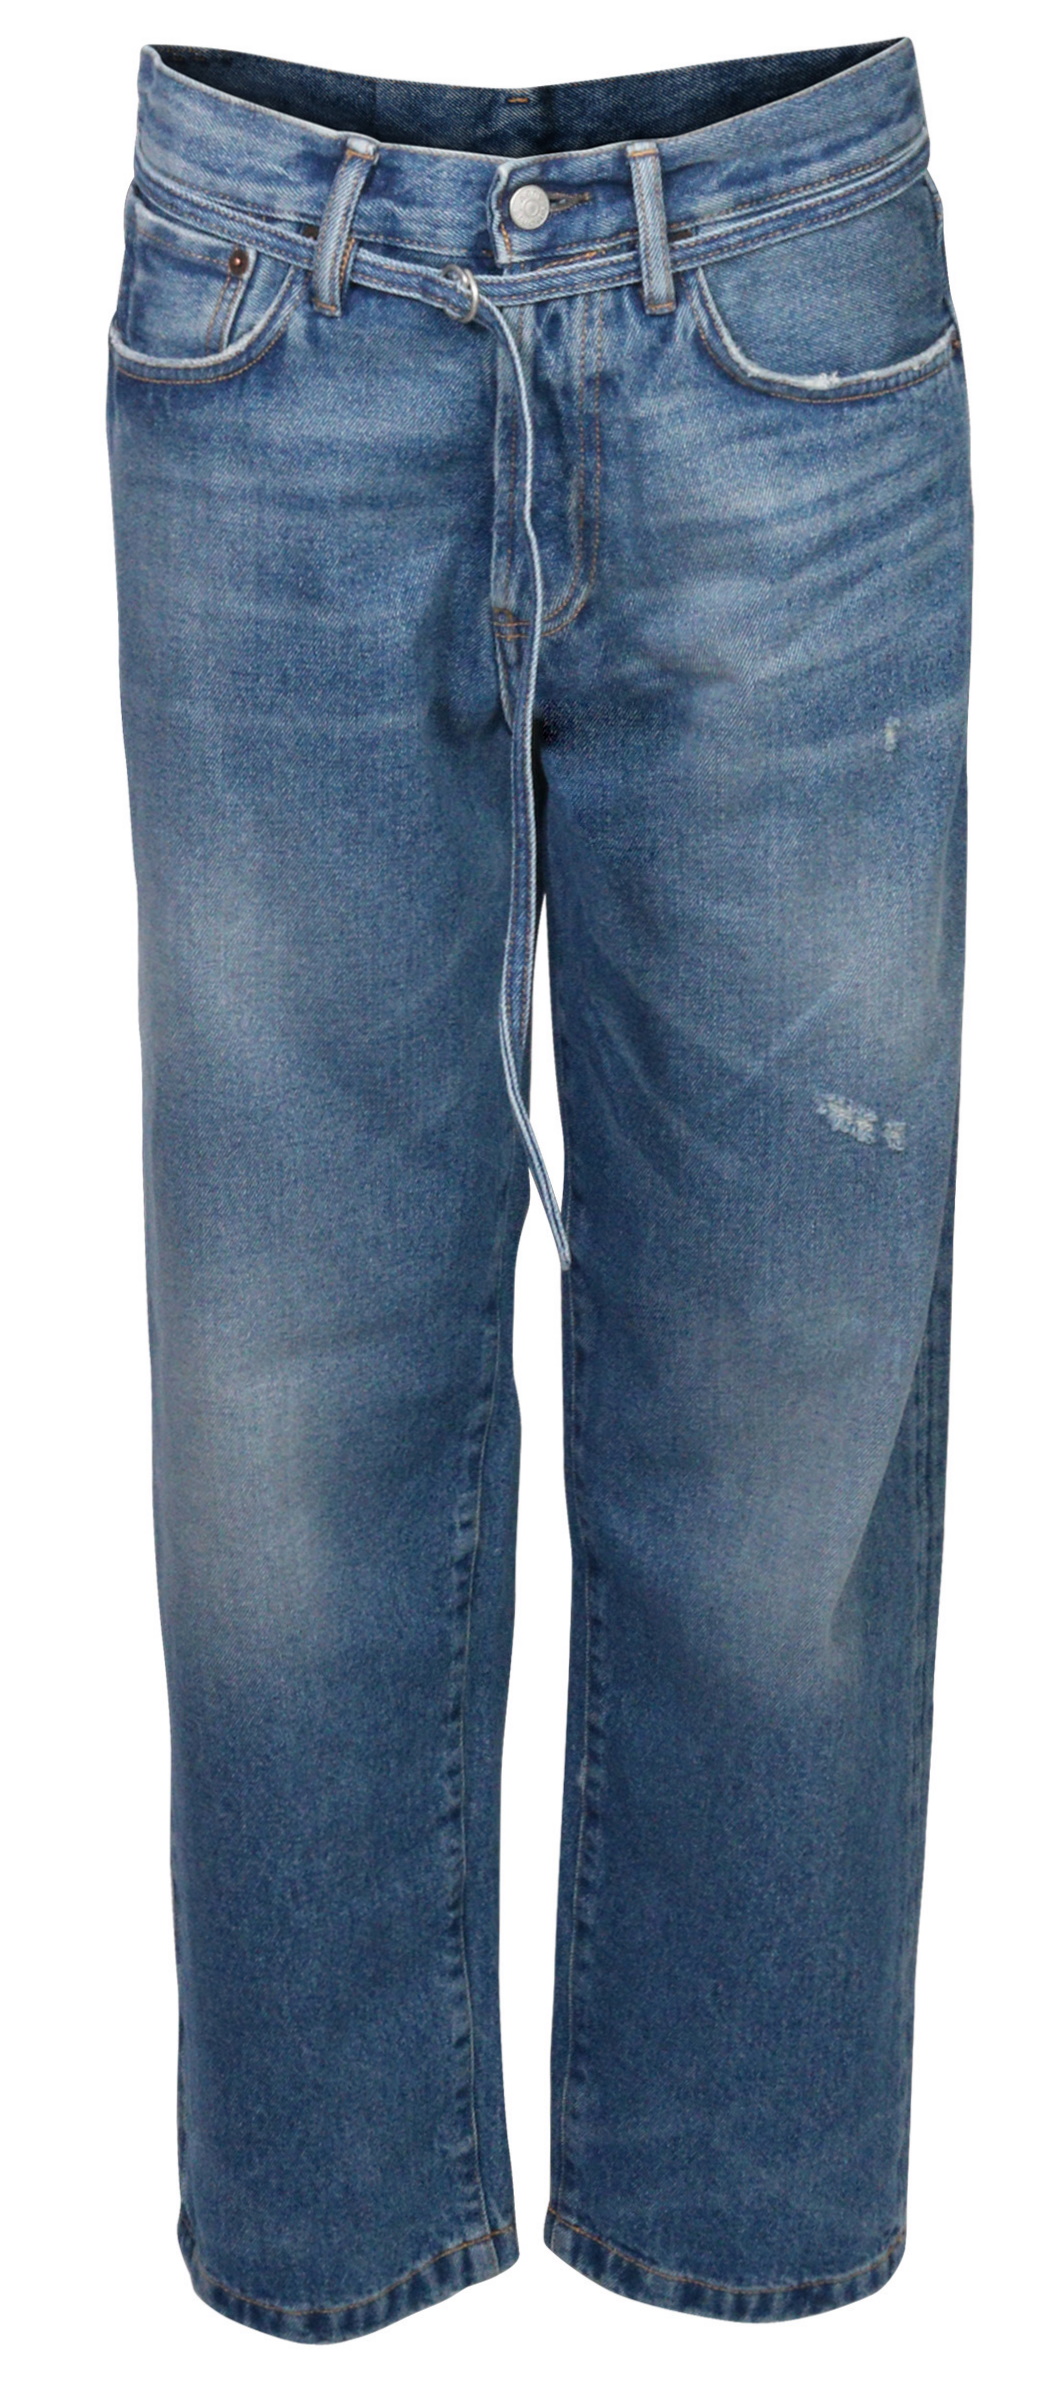 Acne Studios Jeans 1991 Toj Jeans Vintage Mid Blue 32/32